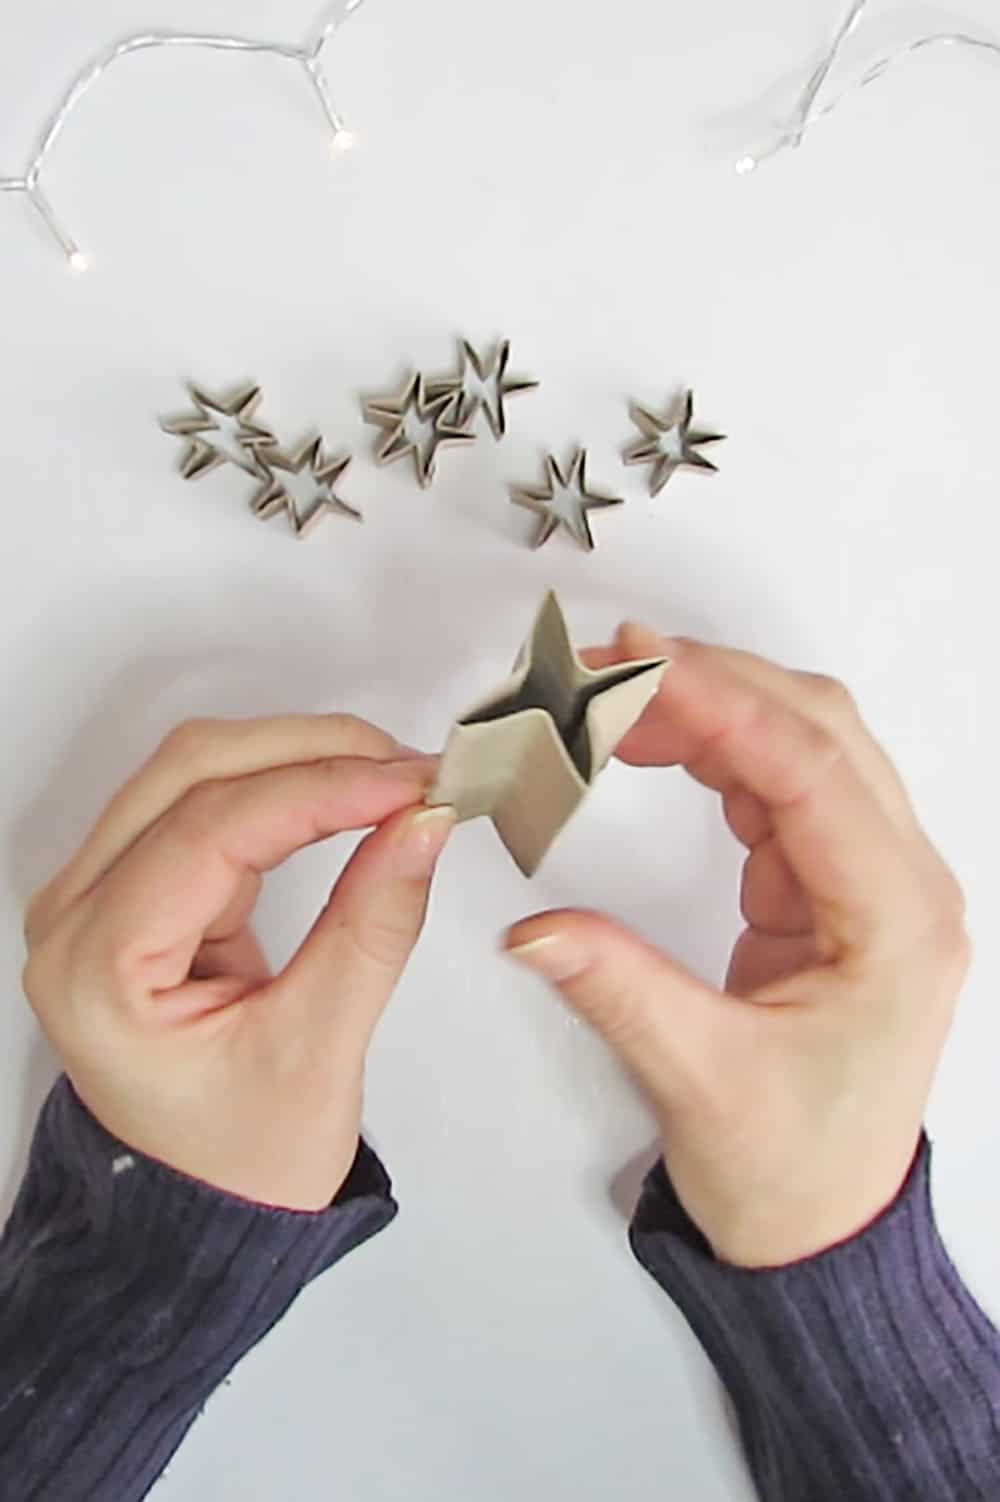 press the cardboard to make the star